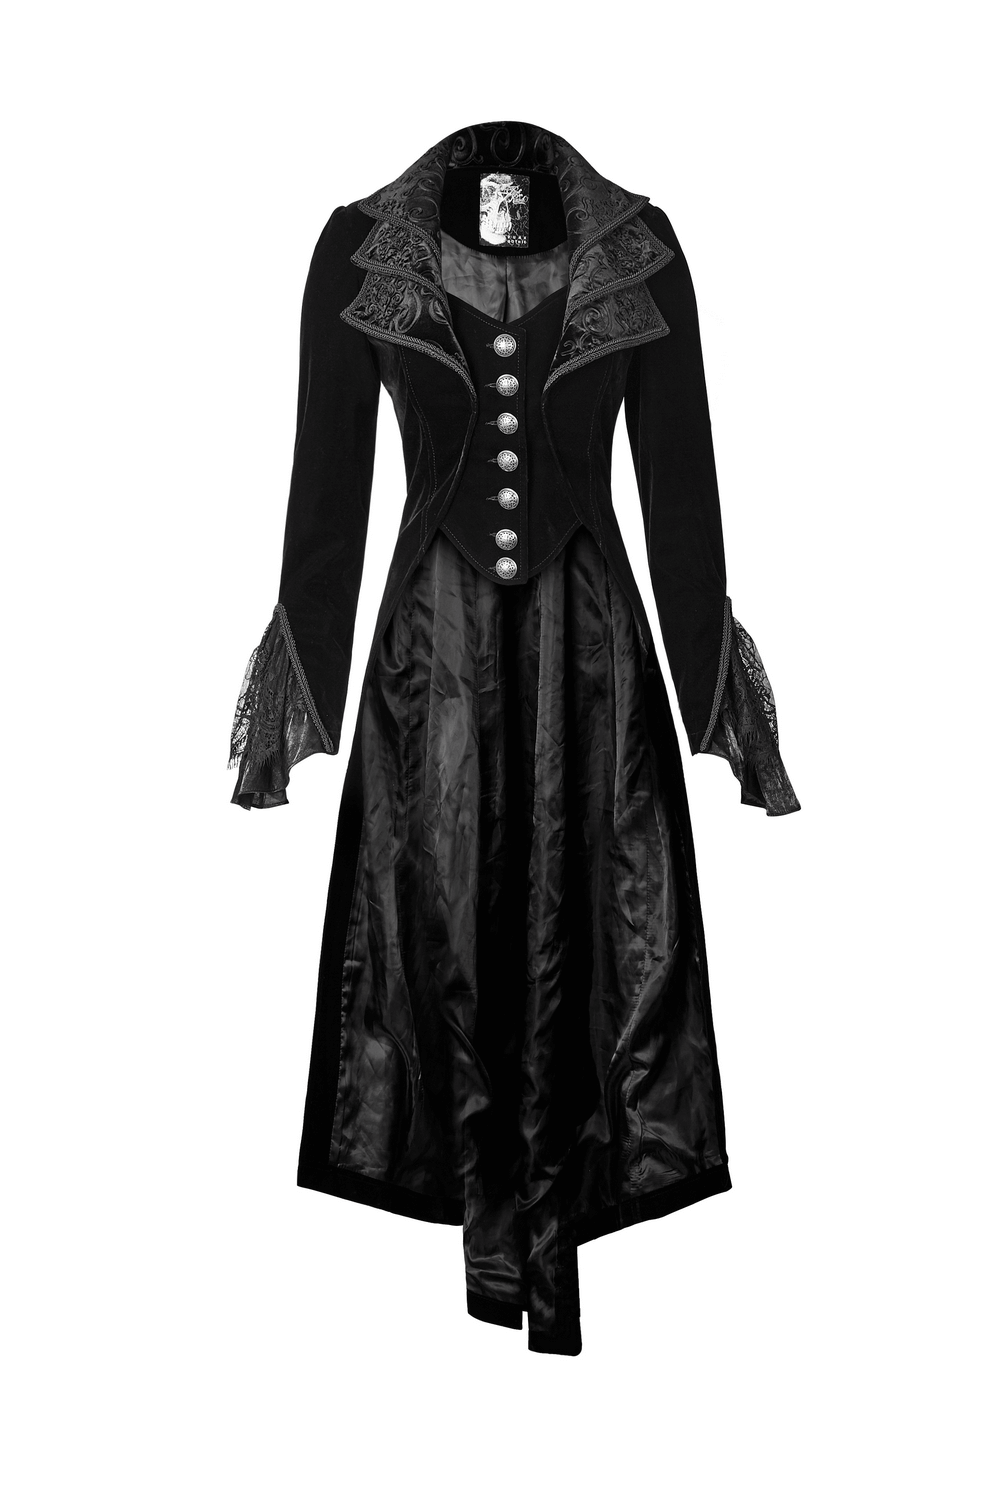 Black Velvet Long Gothic Trench Coat with Cascading Collar